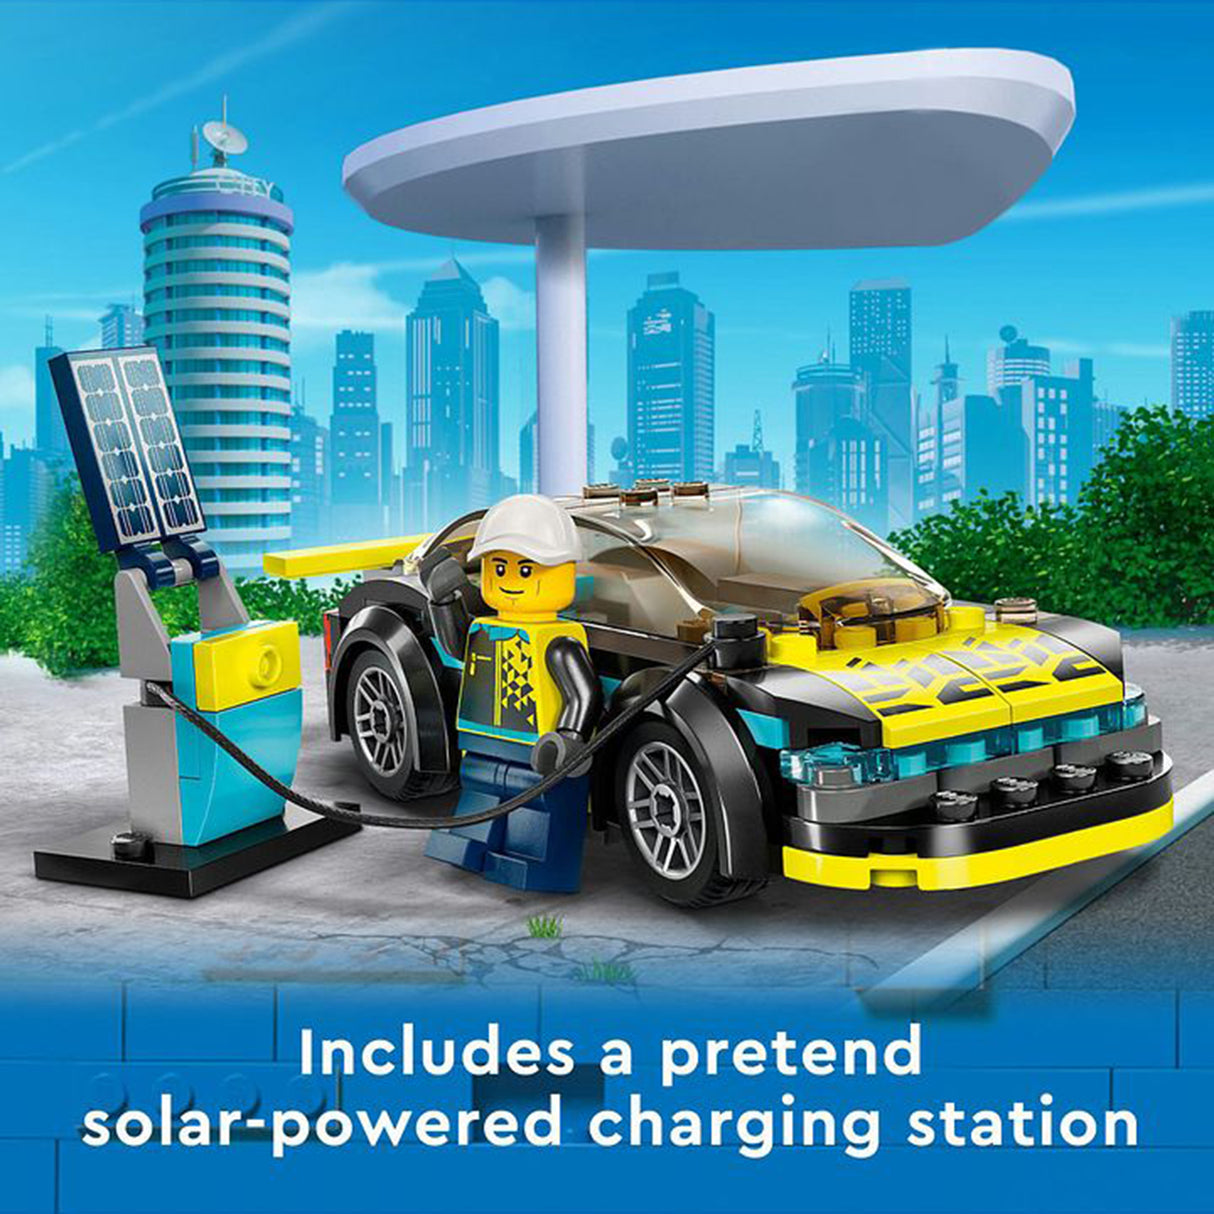 LEGO City Electric Sports Car 60383 (95 pieces)